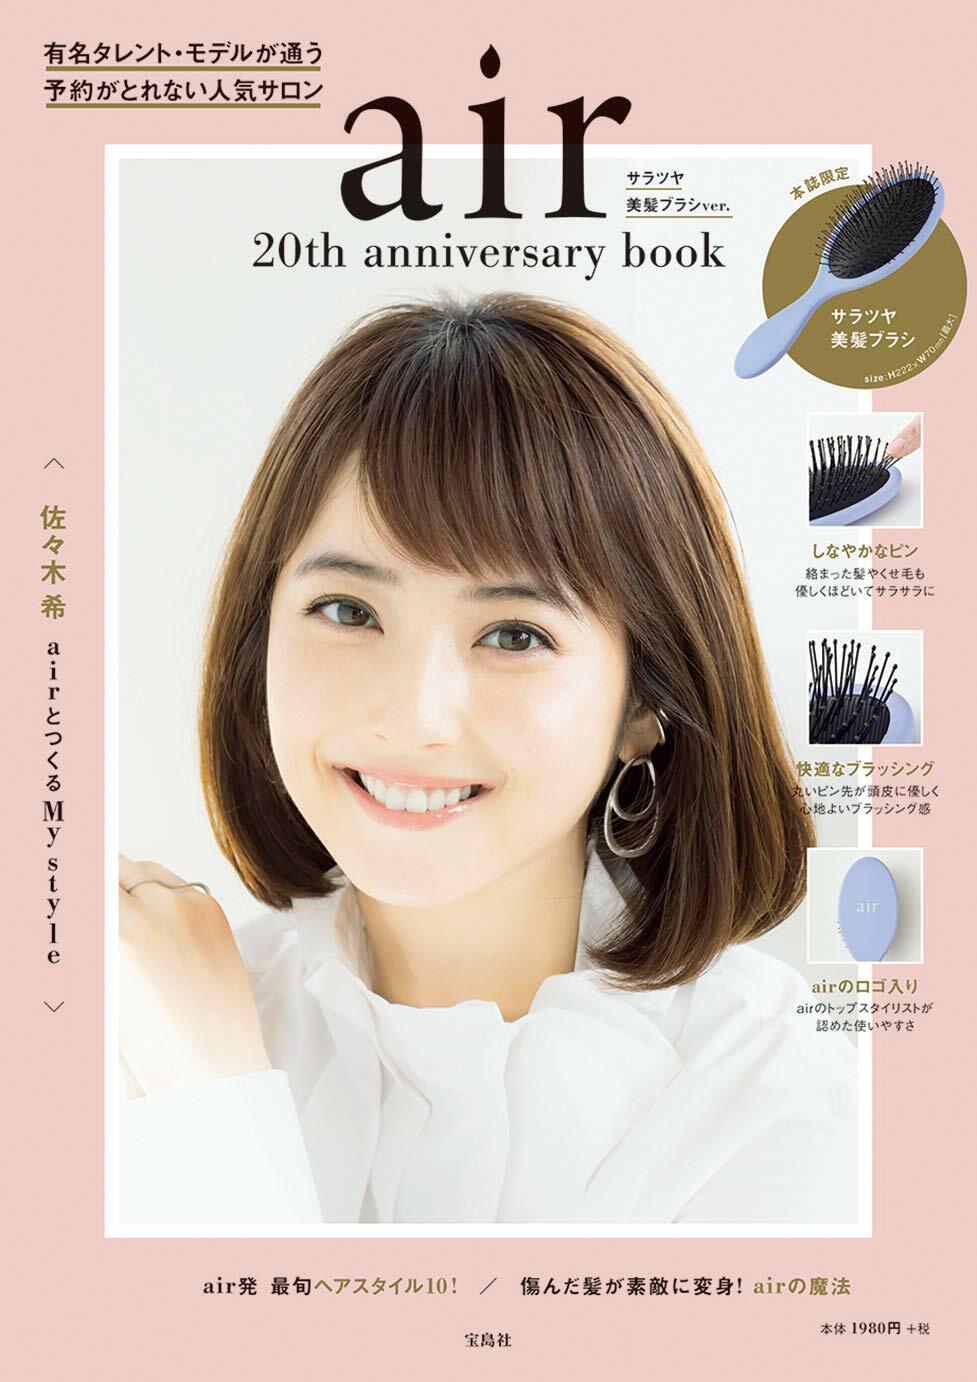 air 20th anniversary book サラツヤ美髮ブラシver. (バラエティ)